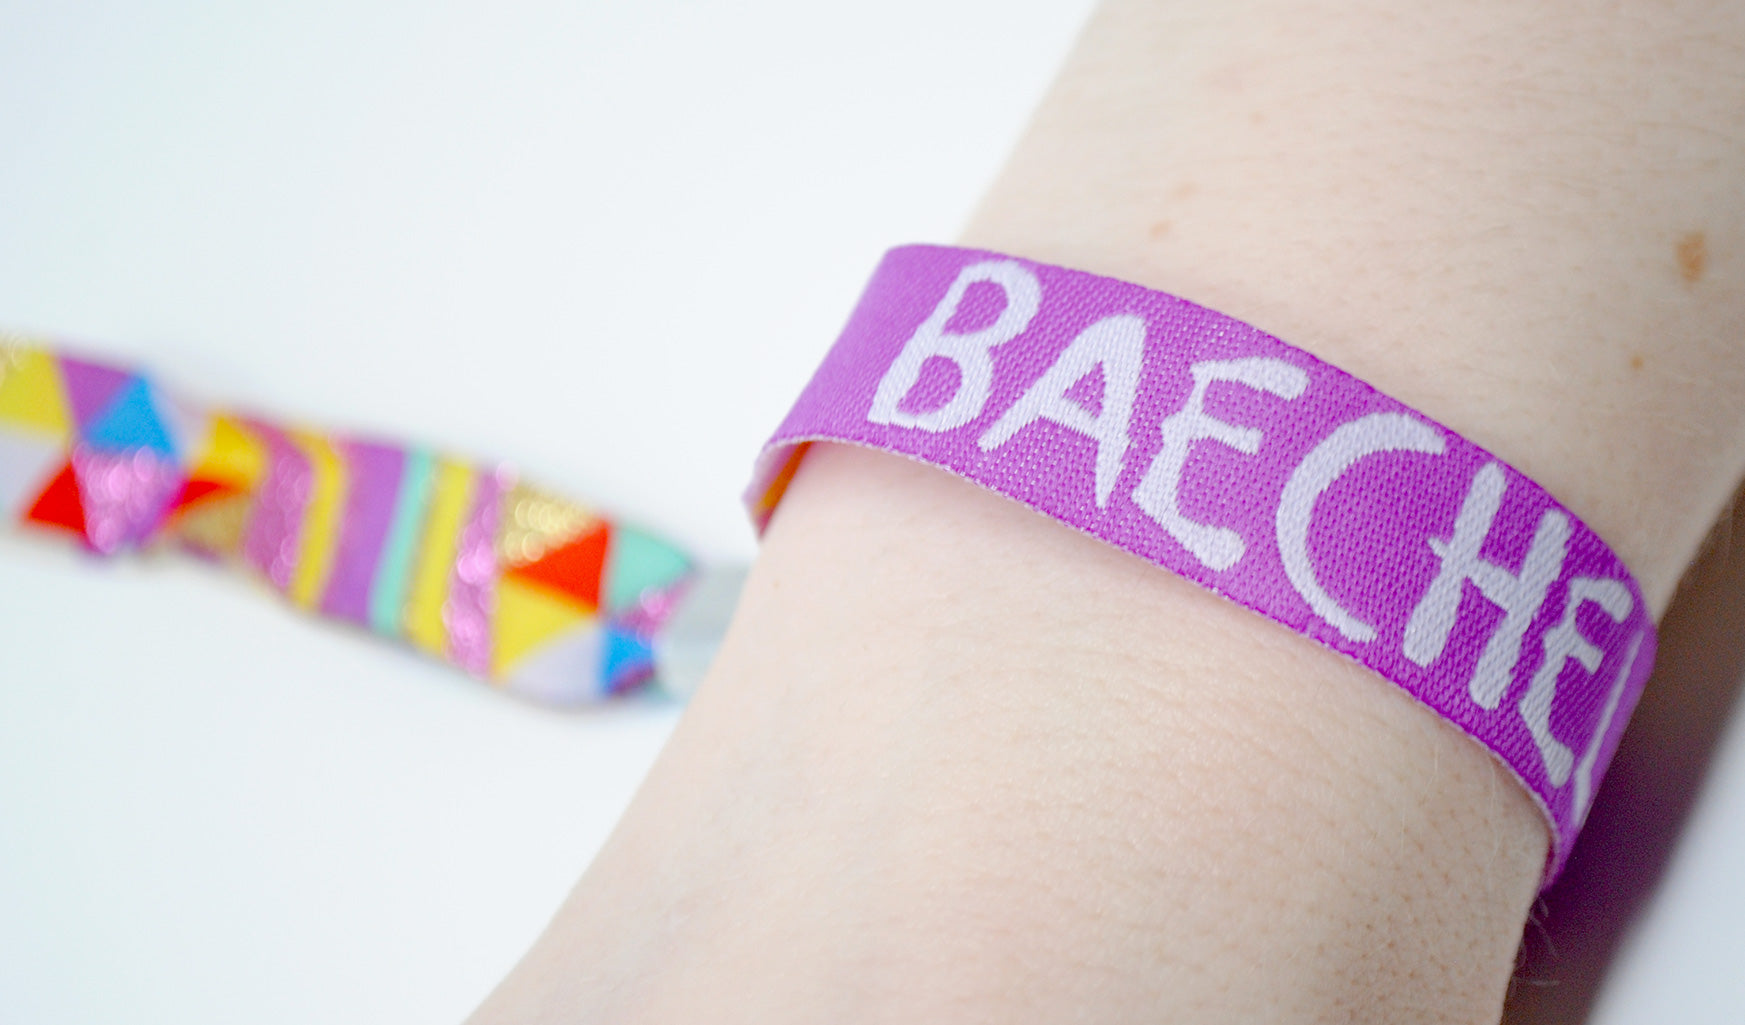 baechella festival wristband party favors